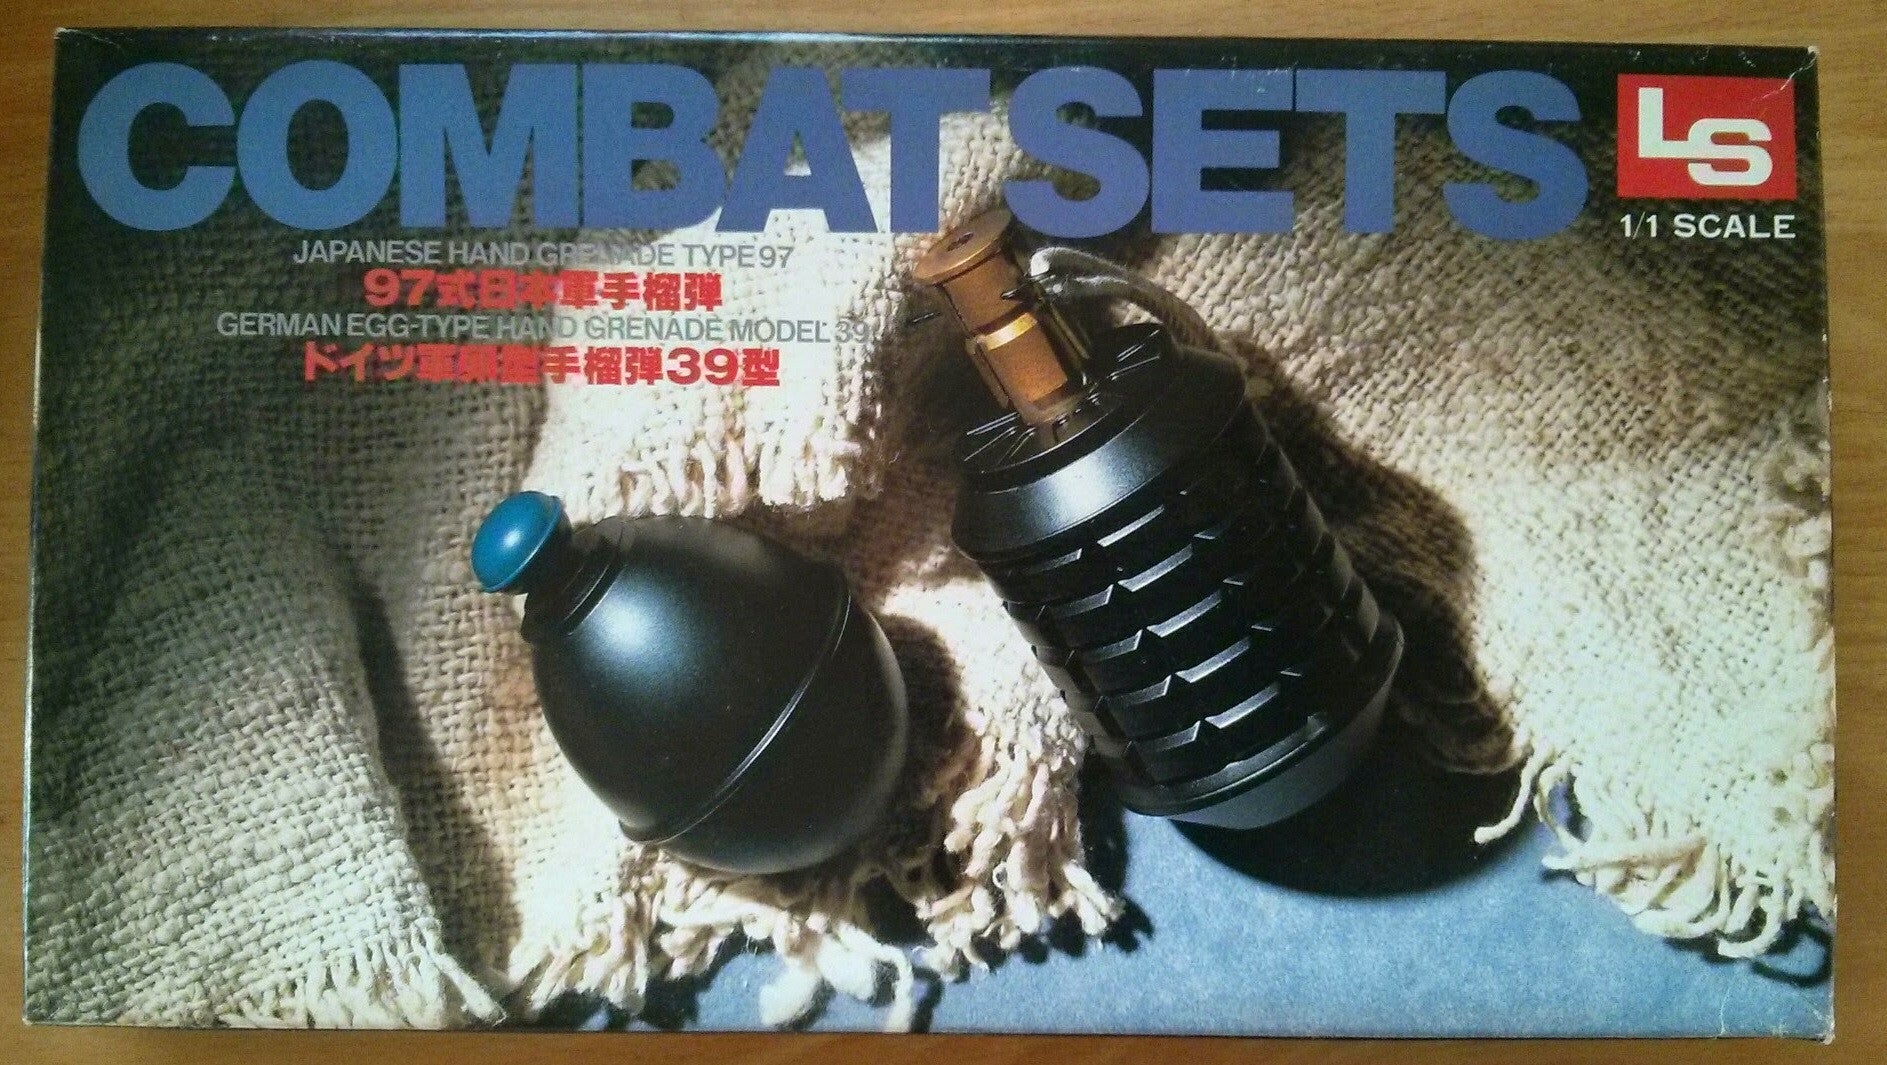 LS 1/1 Combat Sets Japanese Hand Grenade Type 97 German Egg 39 Plastic Model Kit Figure - Lavits Figure
